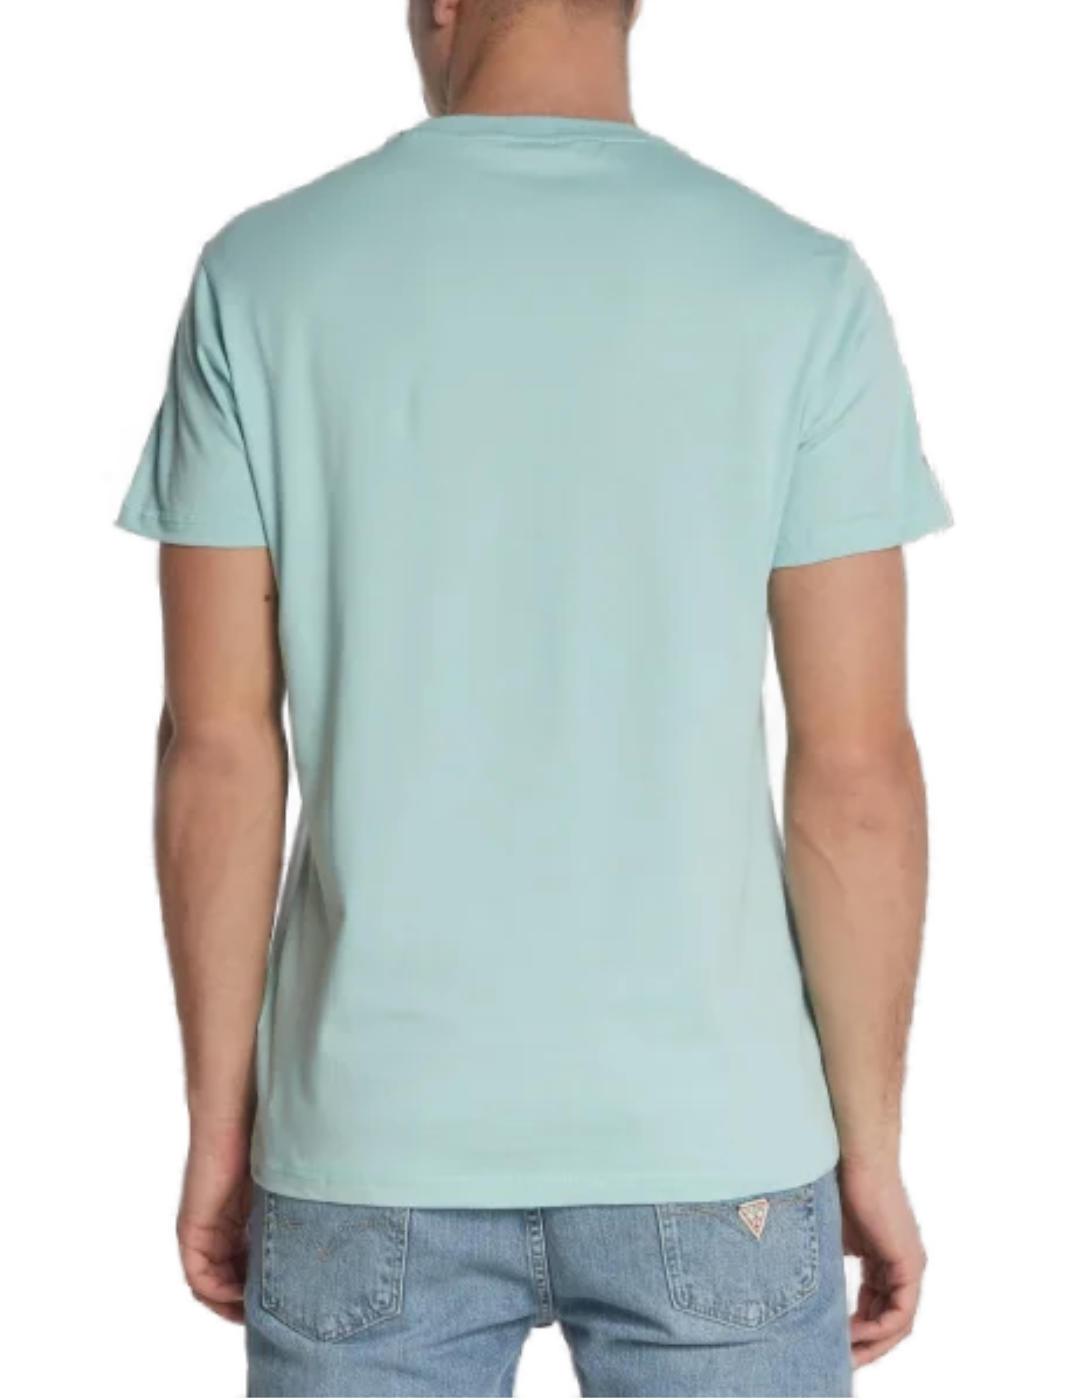 Camiseta Guess Collegue verde agua manga corta para hombre